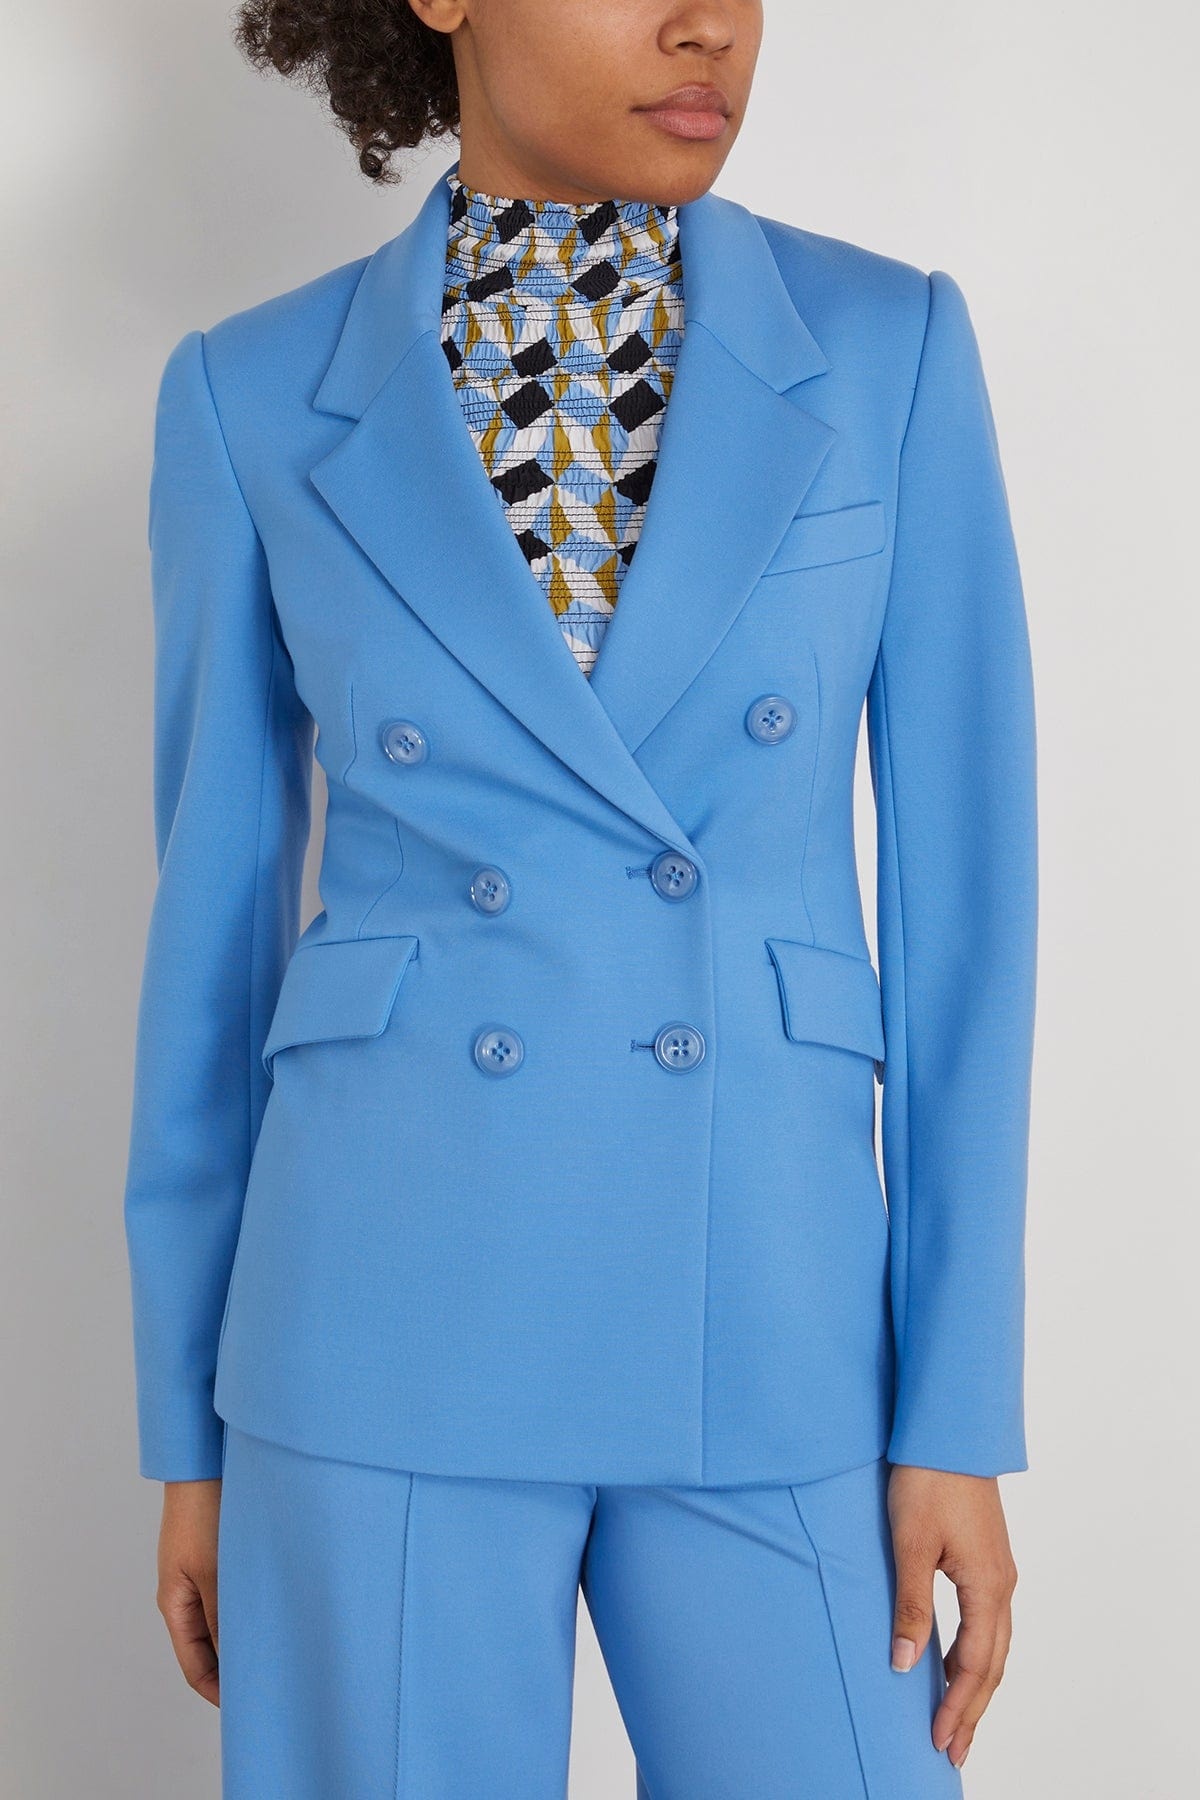 Emotional Essence Jacket in Cornflower Blue - 3